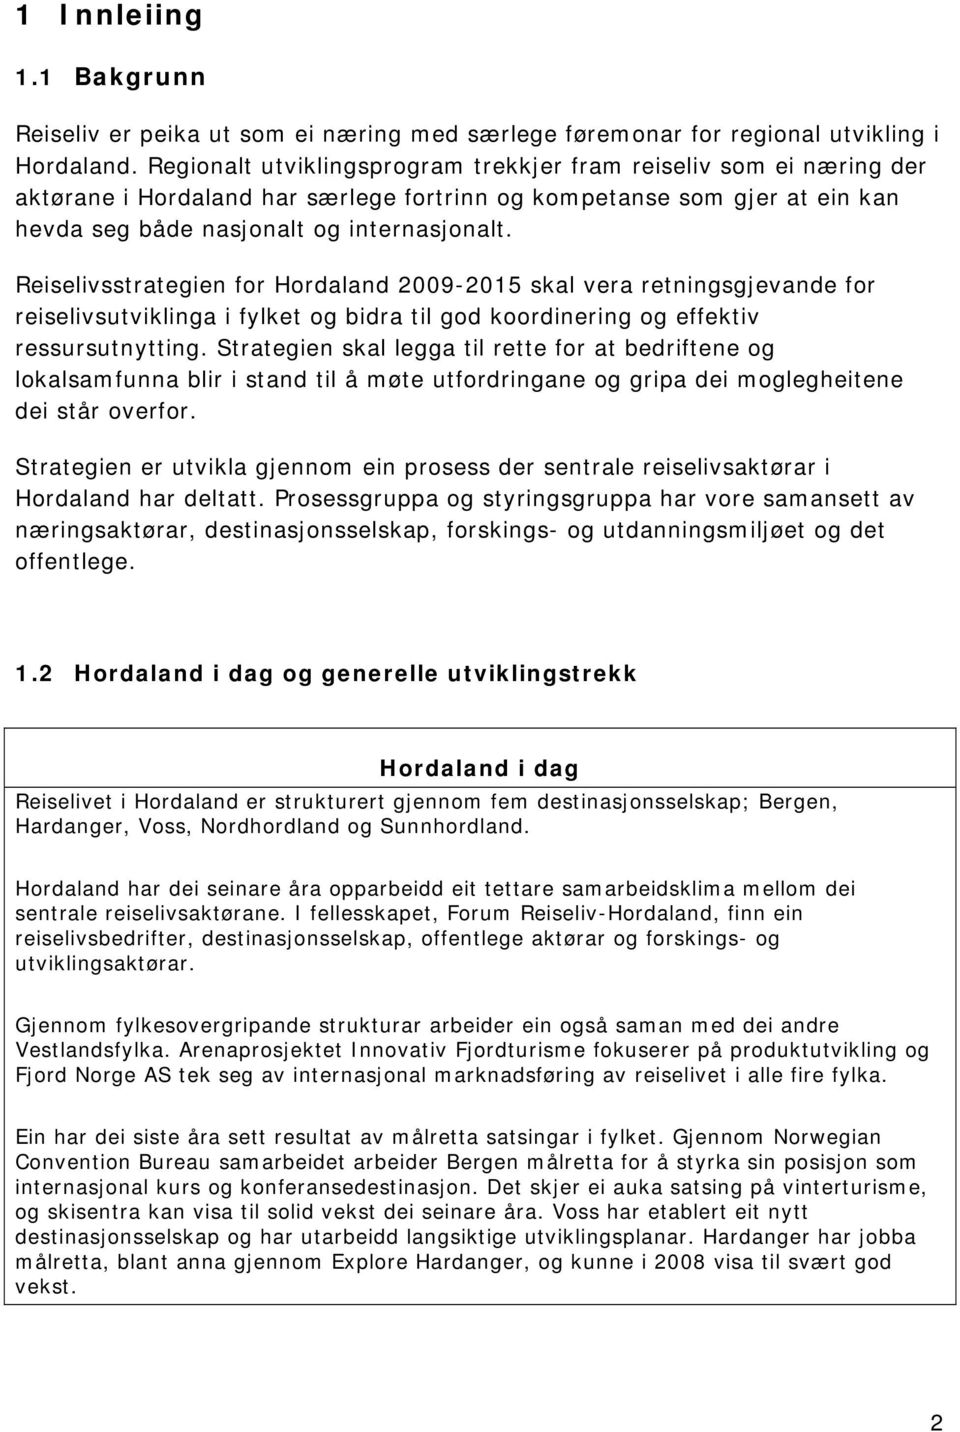 Reiselivsstrategien for Hordaland 2009-2015 skal vera retningsgjevande for reiselivsutviklinga i fylket og bidra til god koordinering og effektiv ressursutnytting.